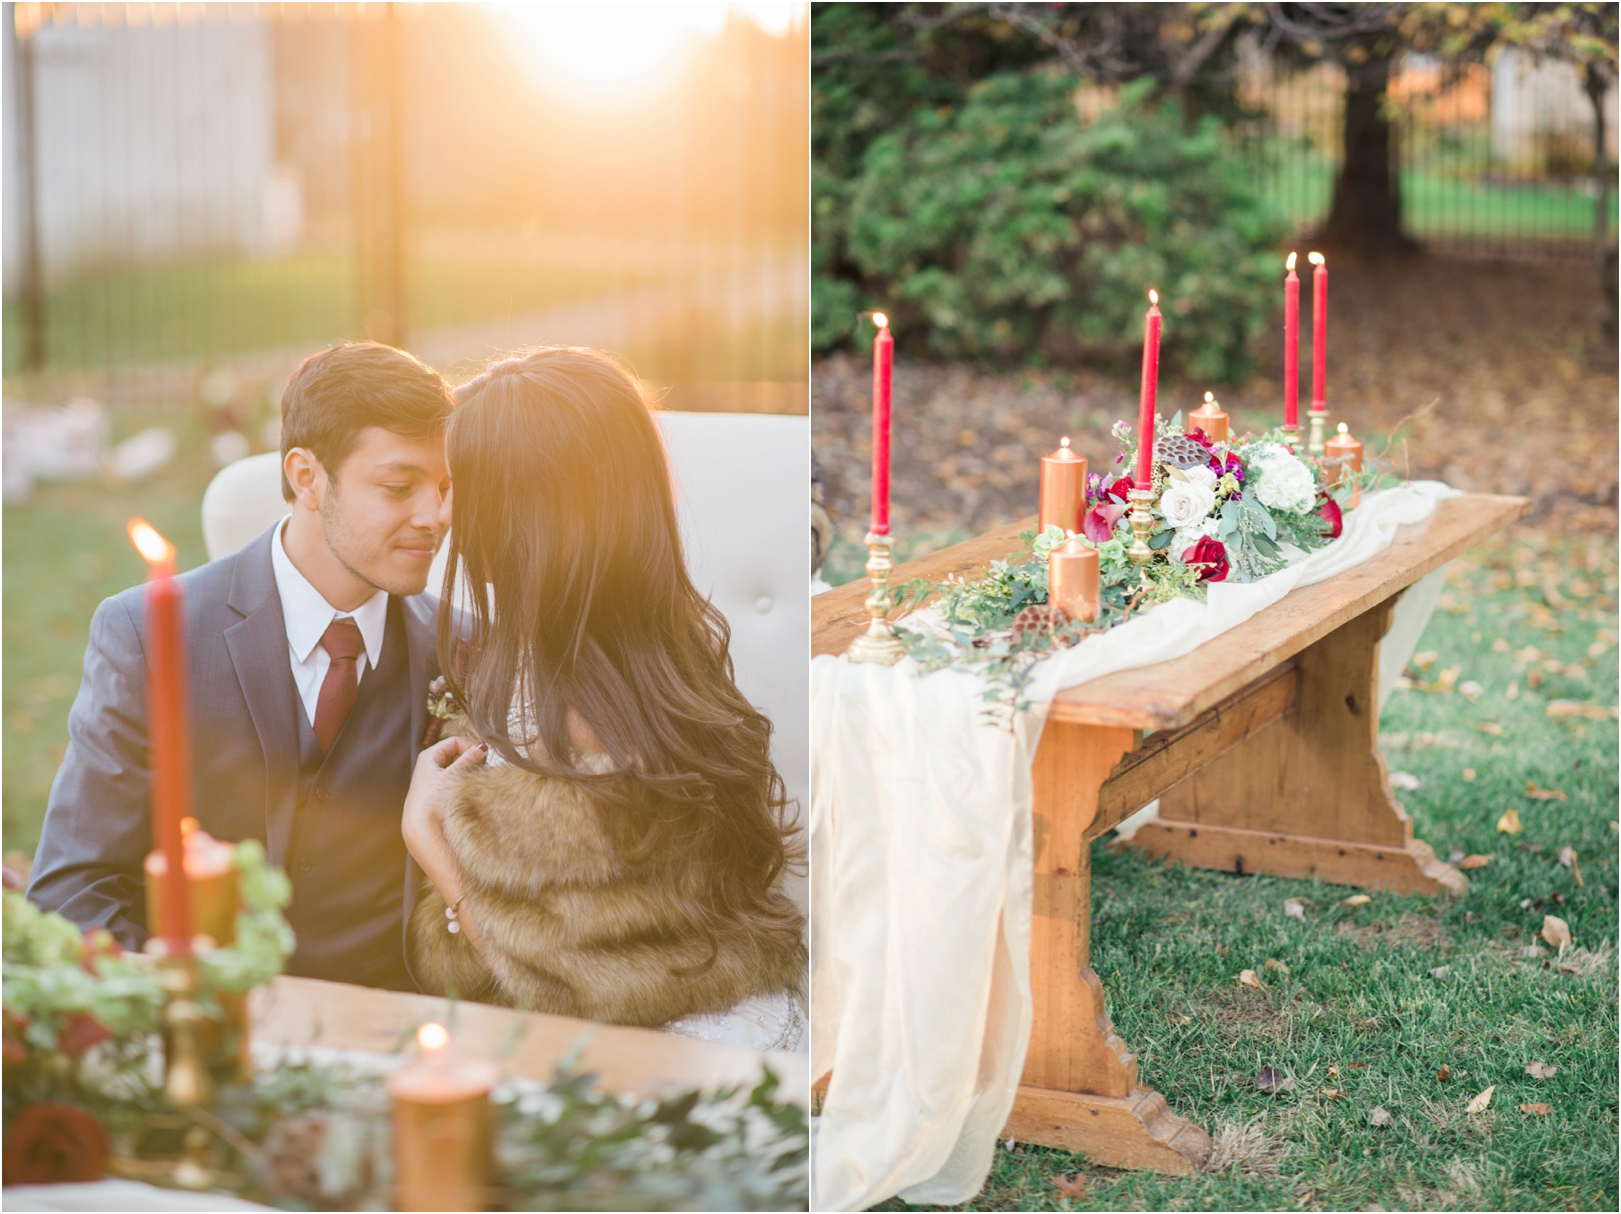 raw wood wedding table setup inspiration with candles